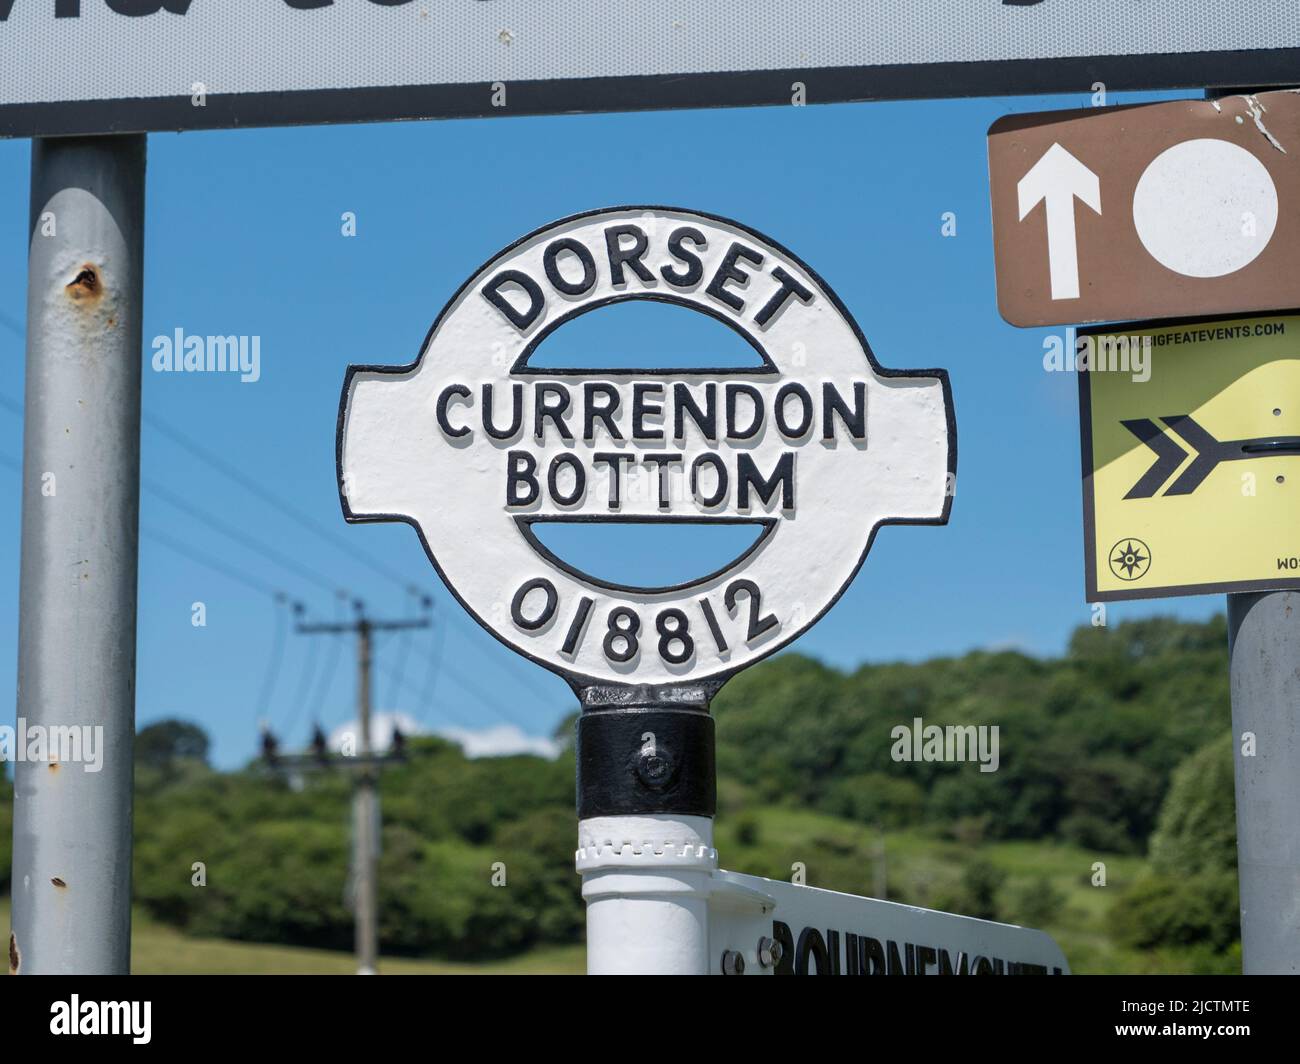 Puerto de referencia de red para Curredon Bottom(018812) en Dorset, Reino Unido. Foto de stock